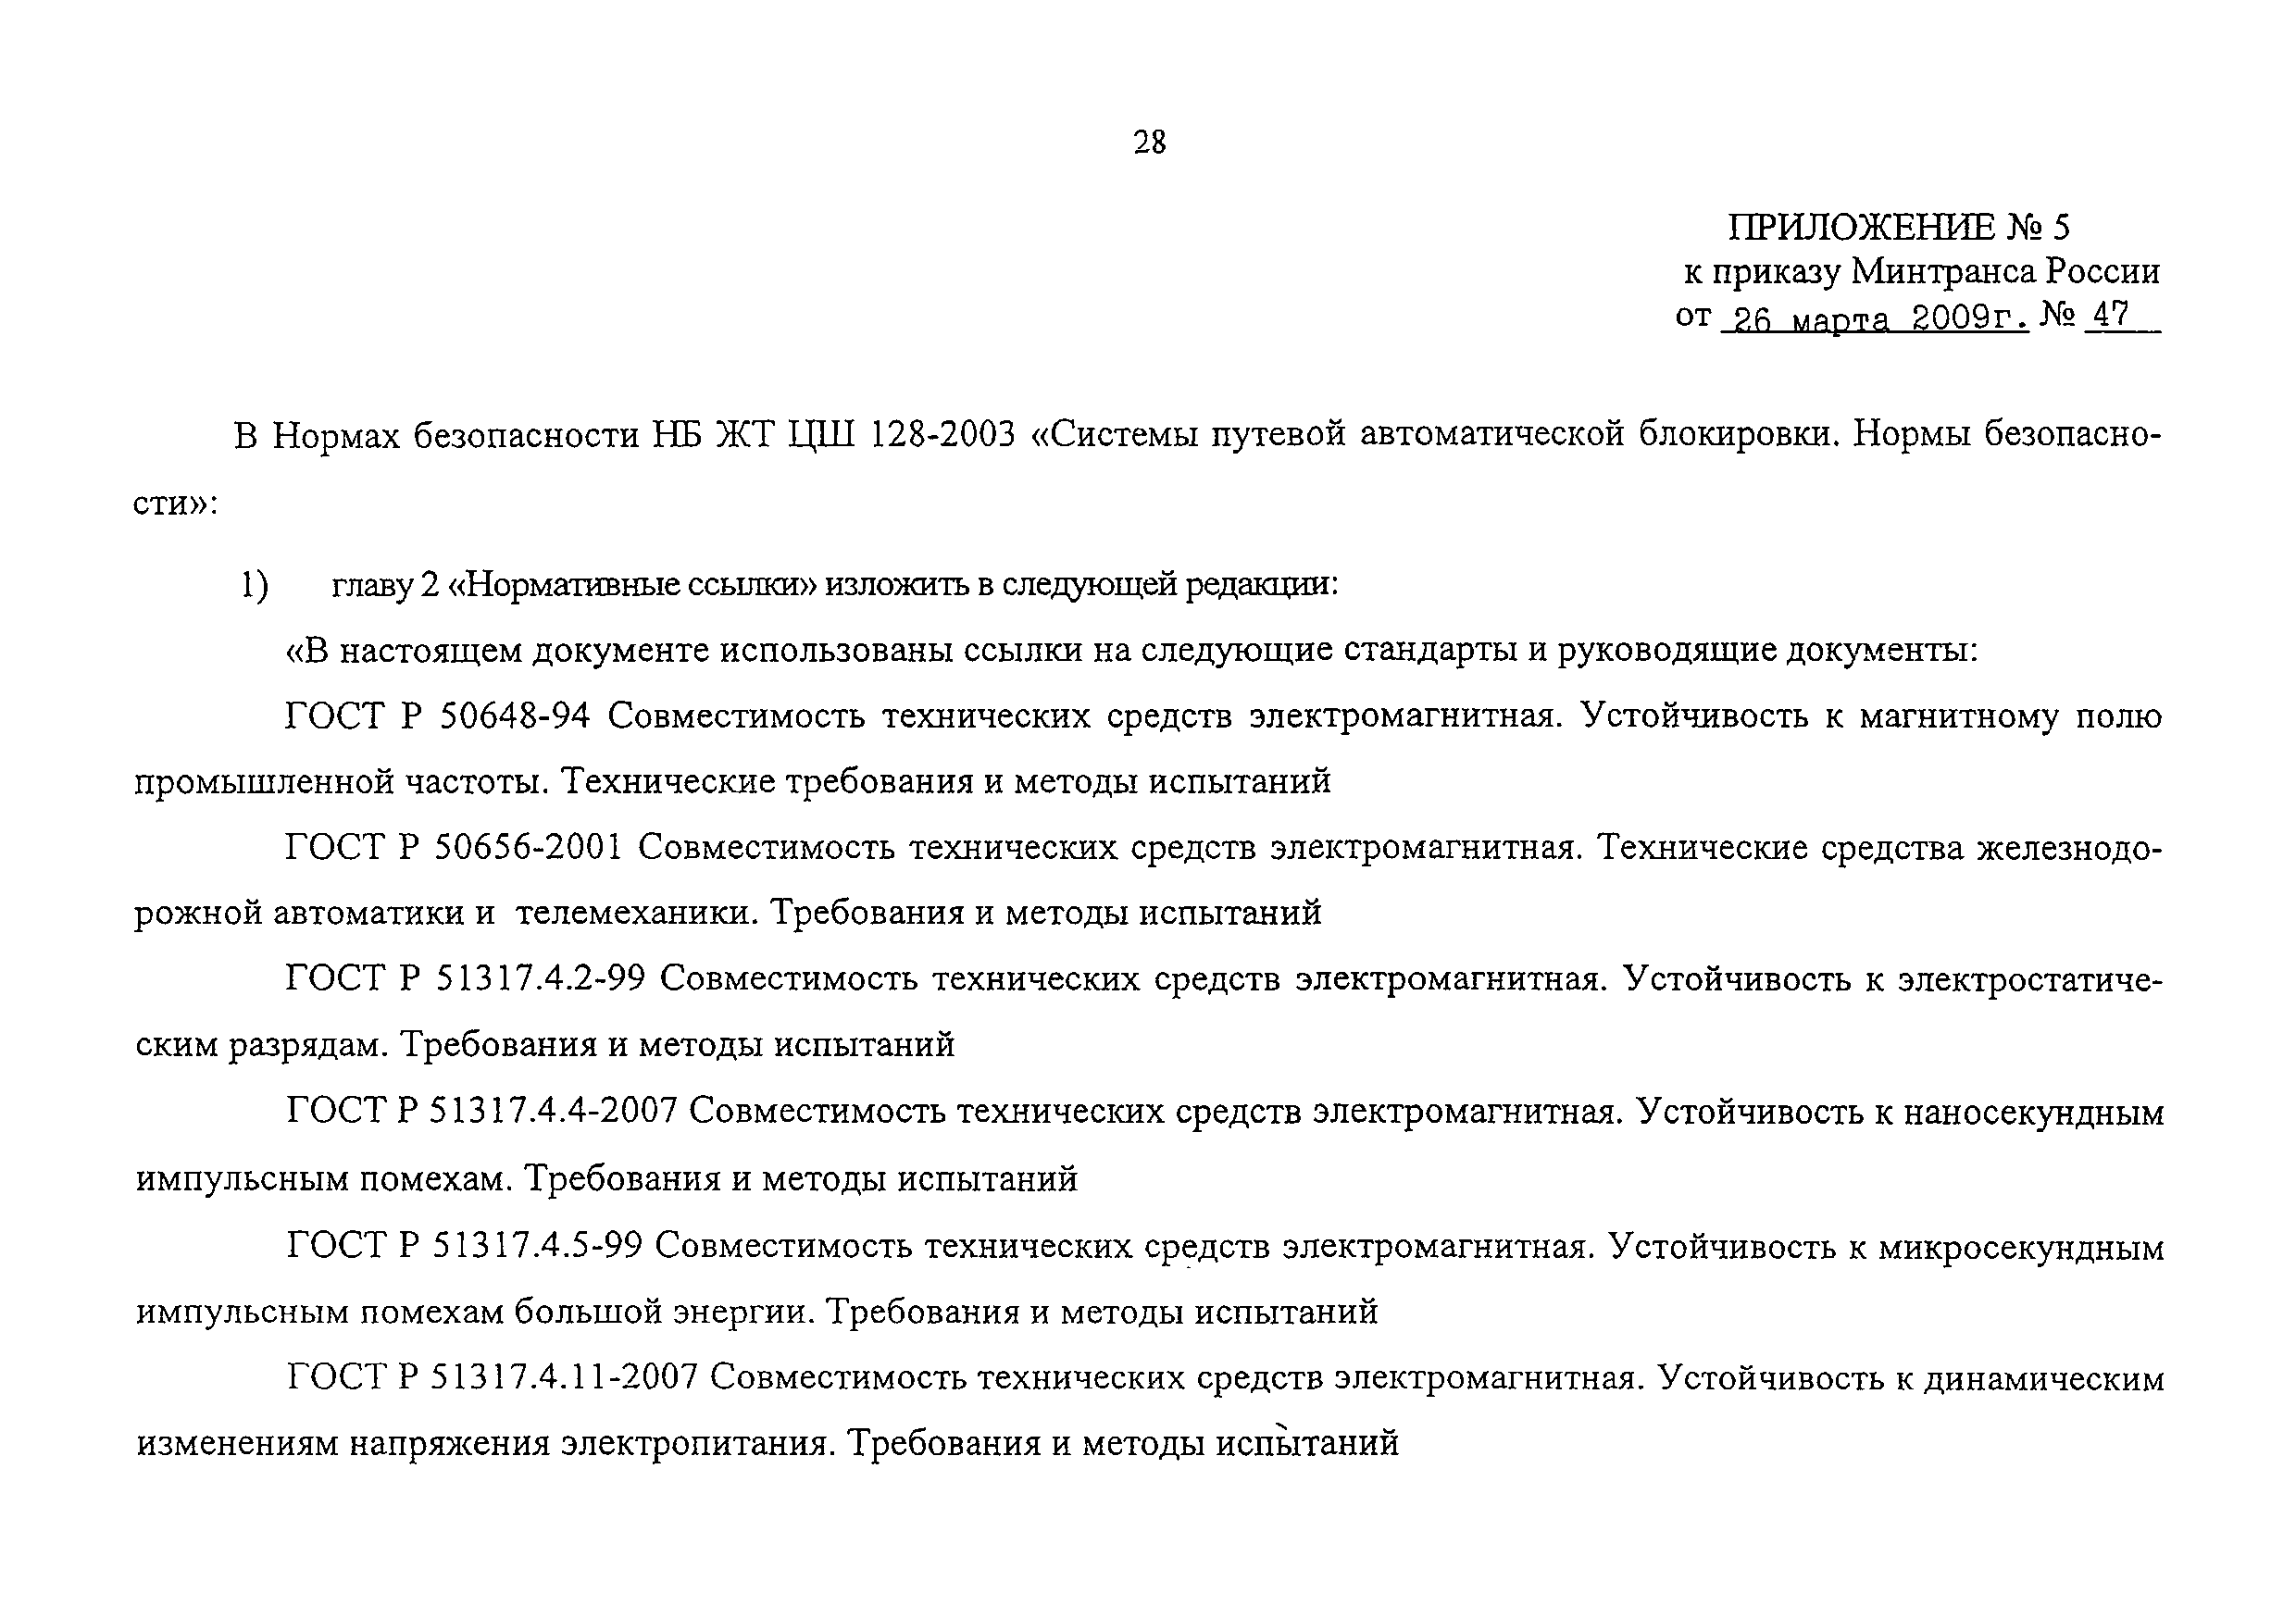 НБ ЖТ ЦШ 128-2003